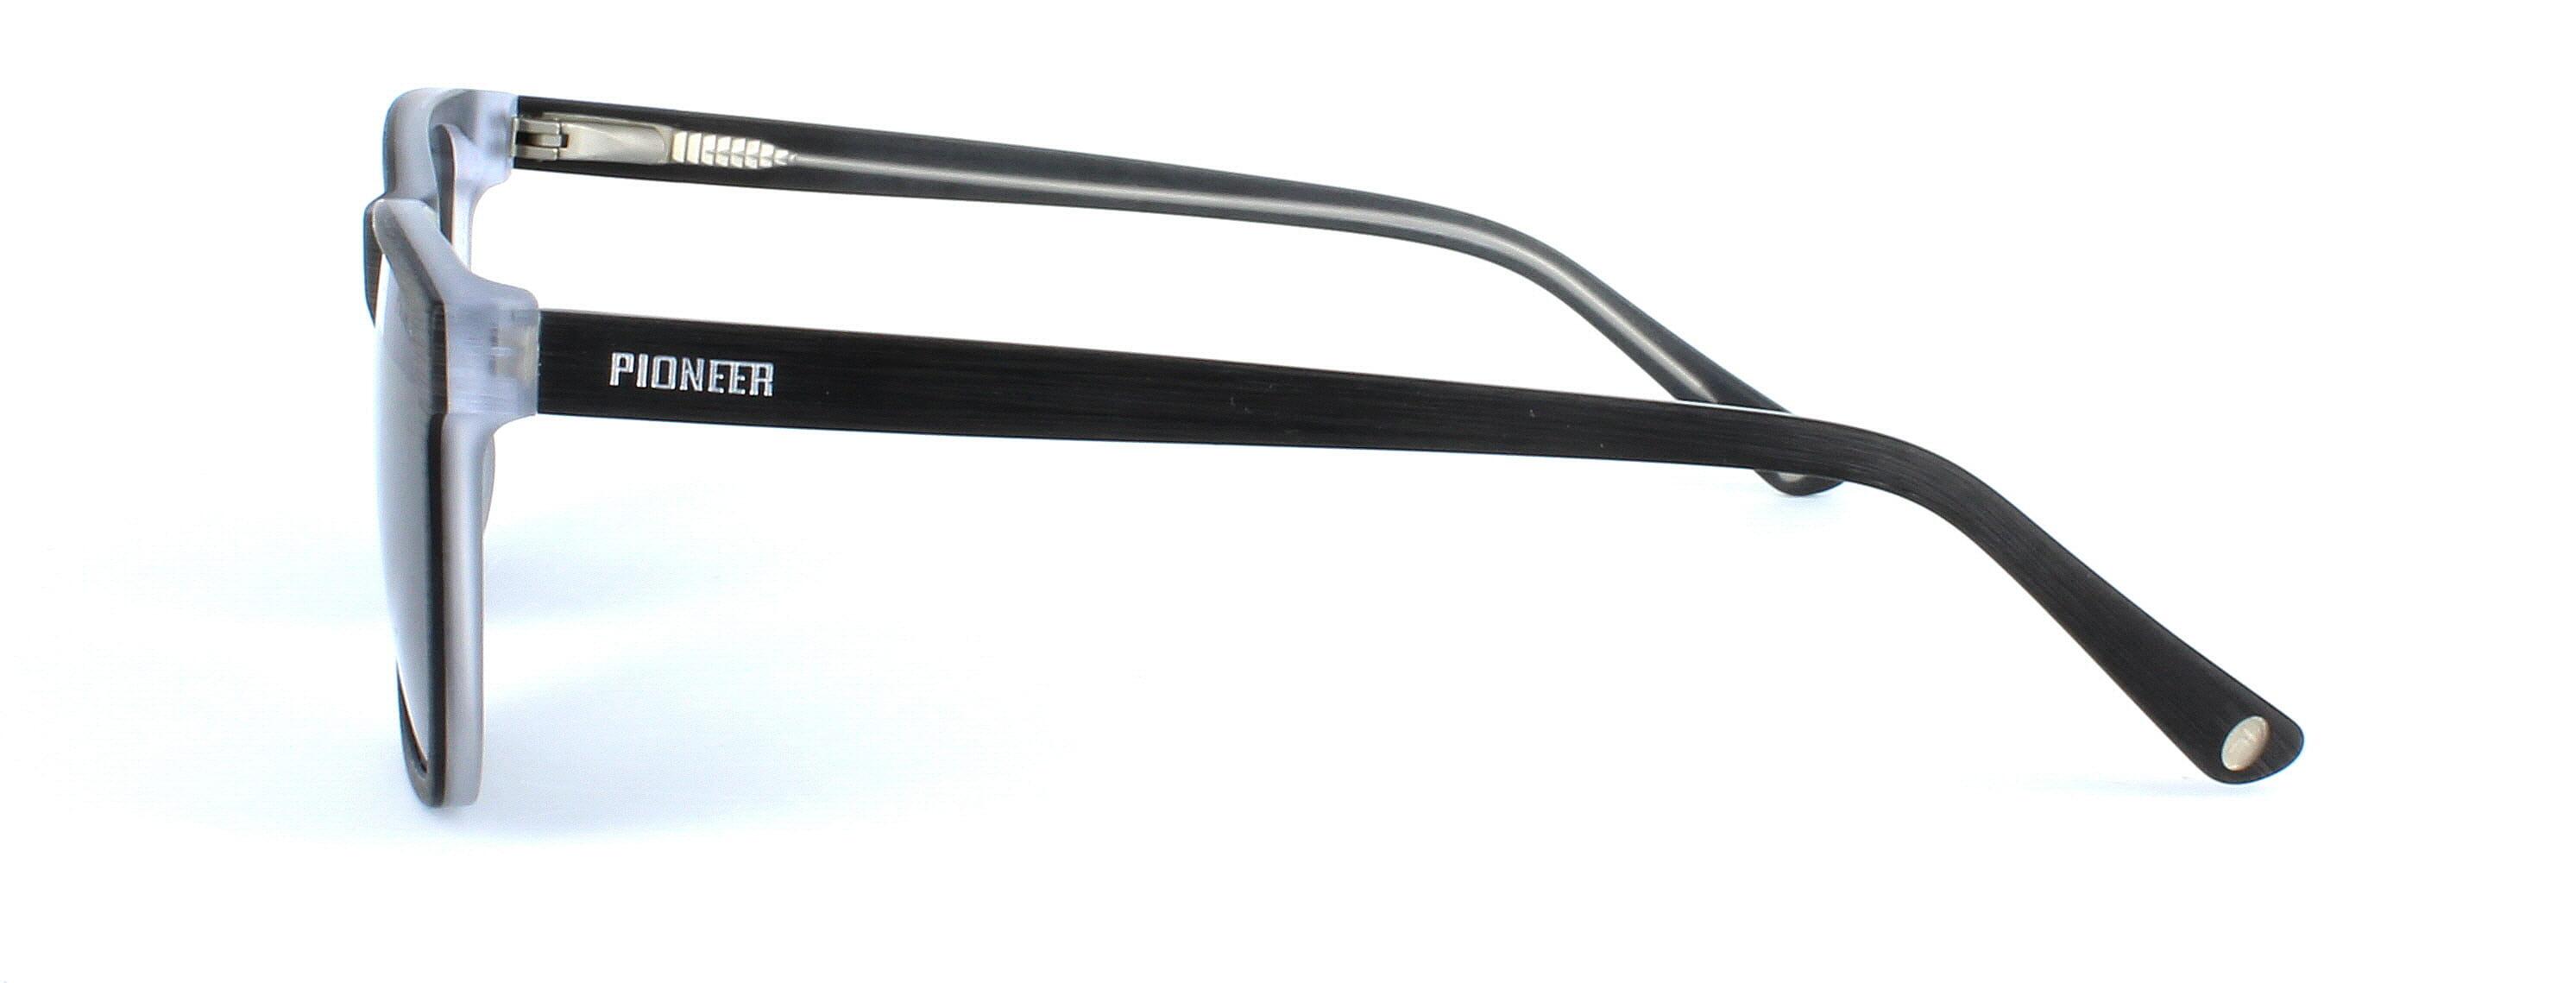 Angelo - unisex plastic sunglasses here in matt brown - image view 2